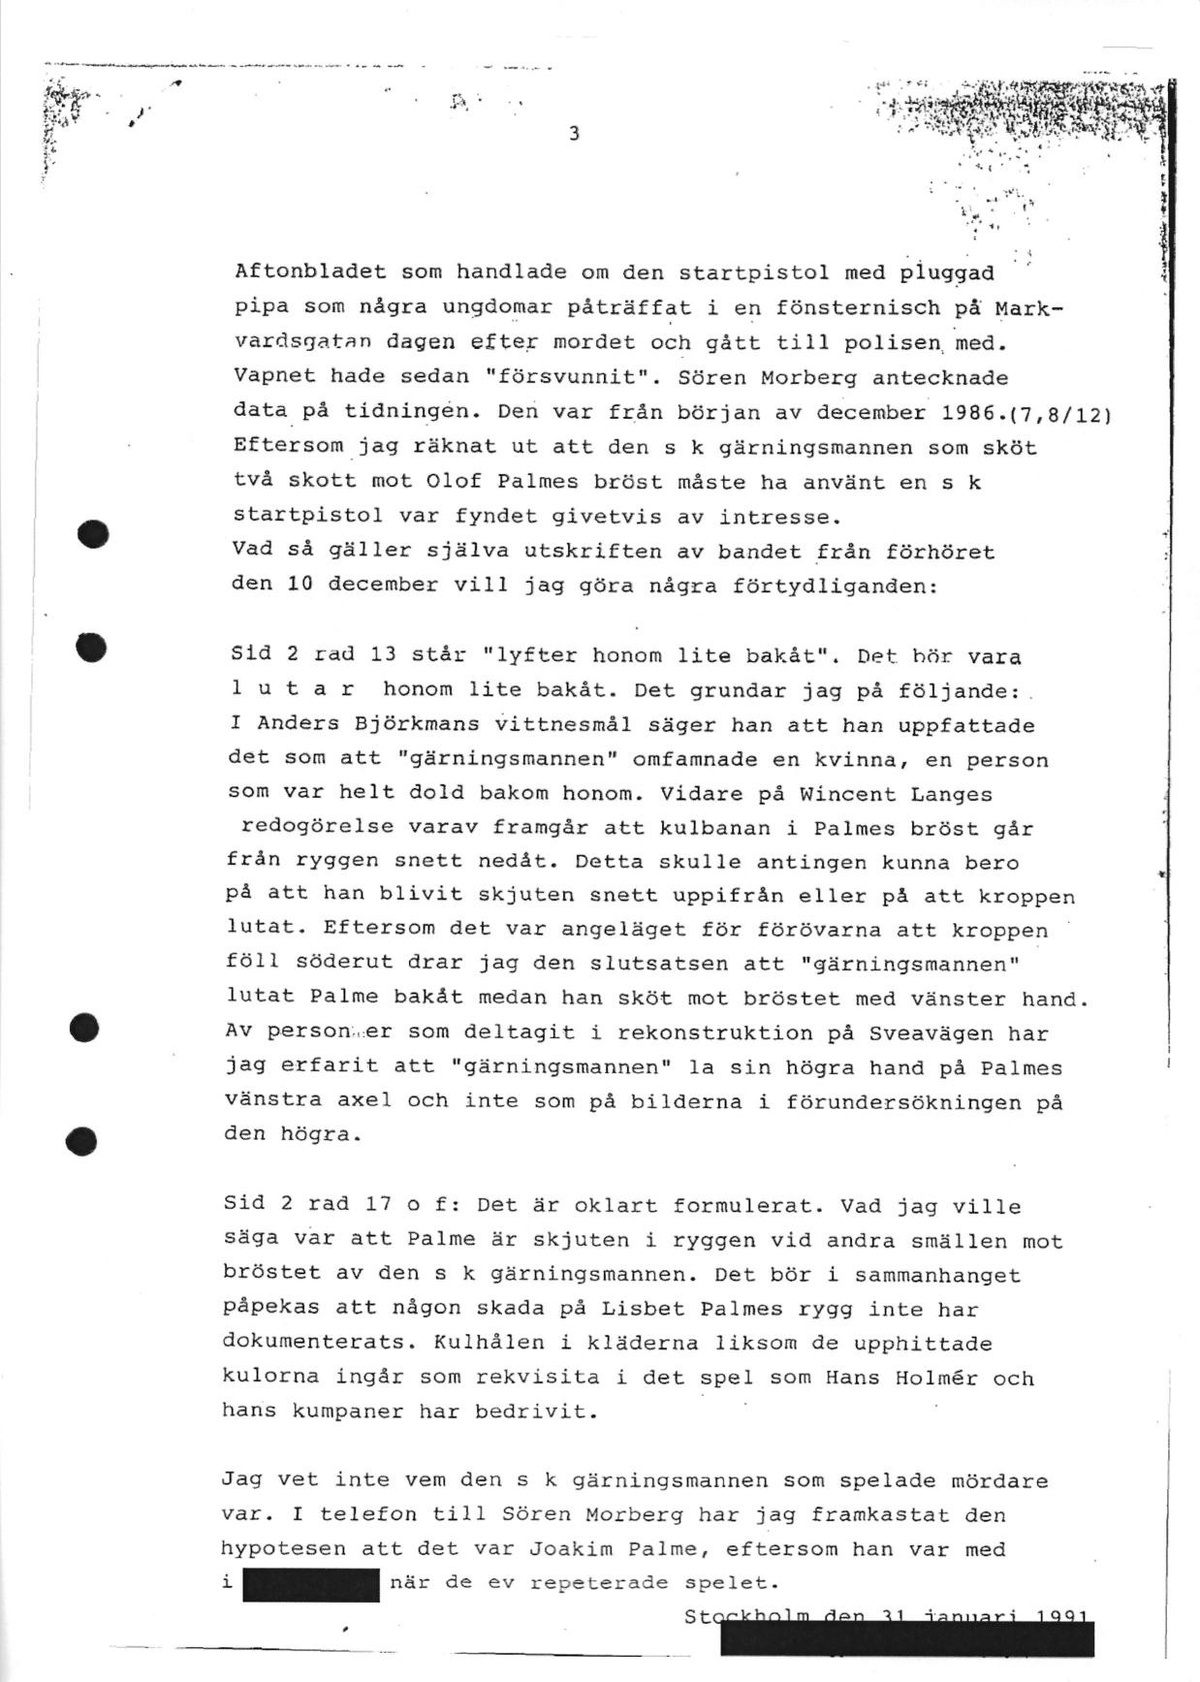 Pol-1991-01-31 EAE340-00-Q Promemoria från Okänd.pdf